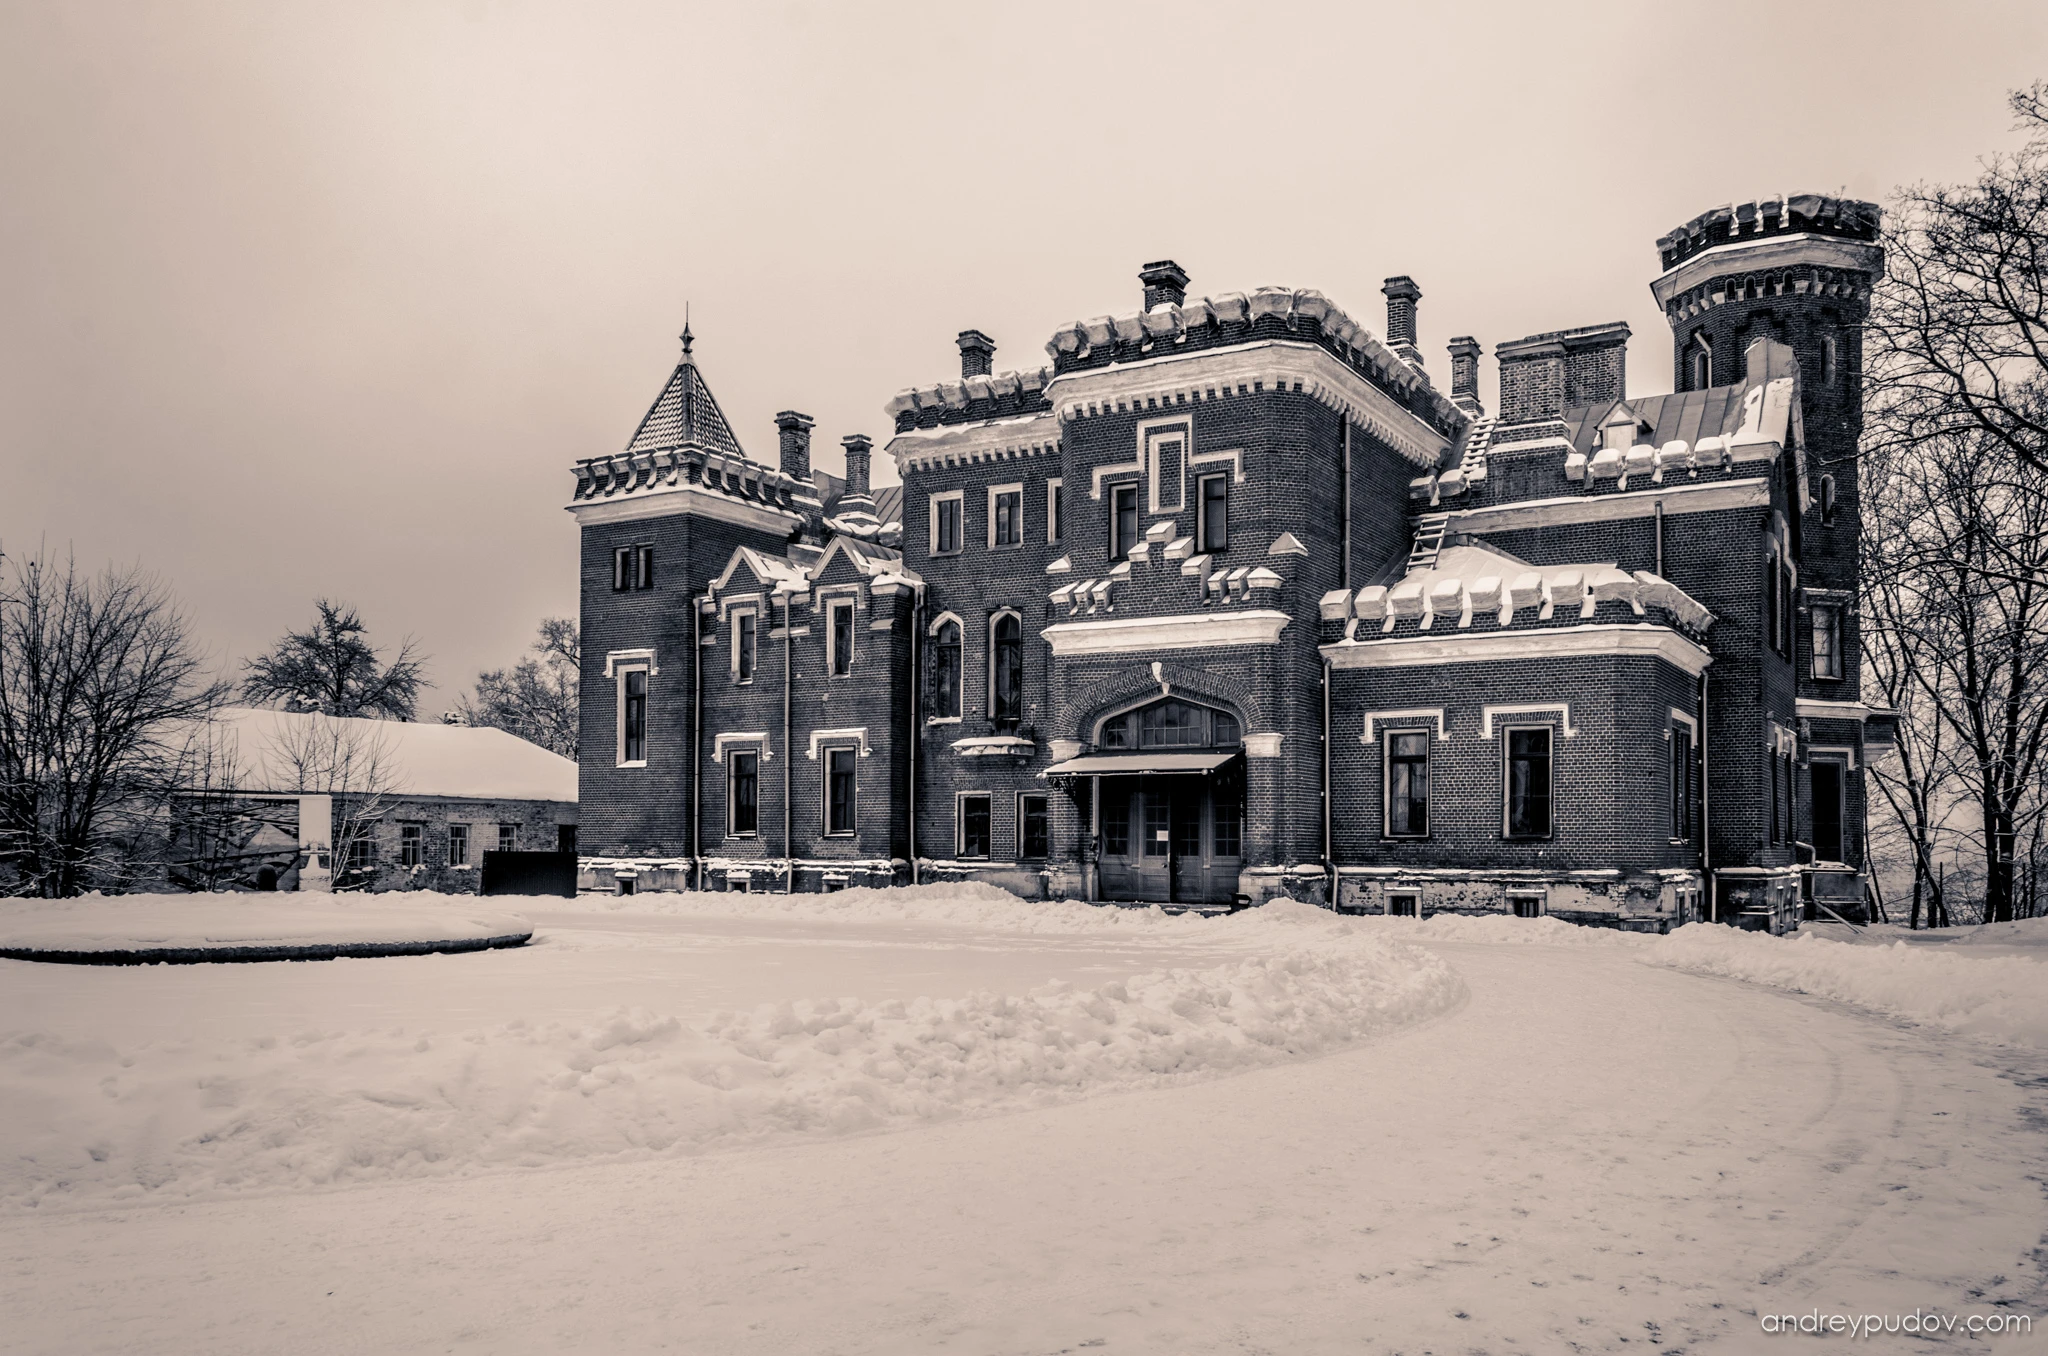 Andrey Pudov Ramon Palace